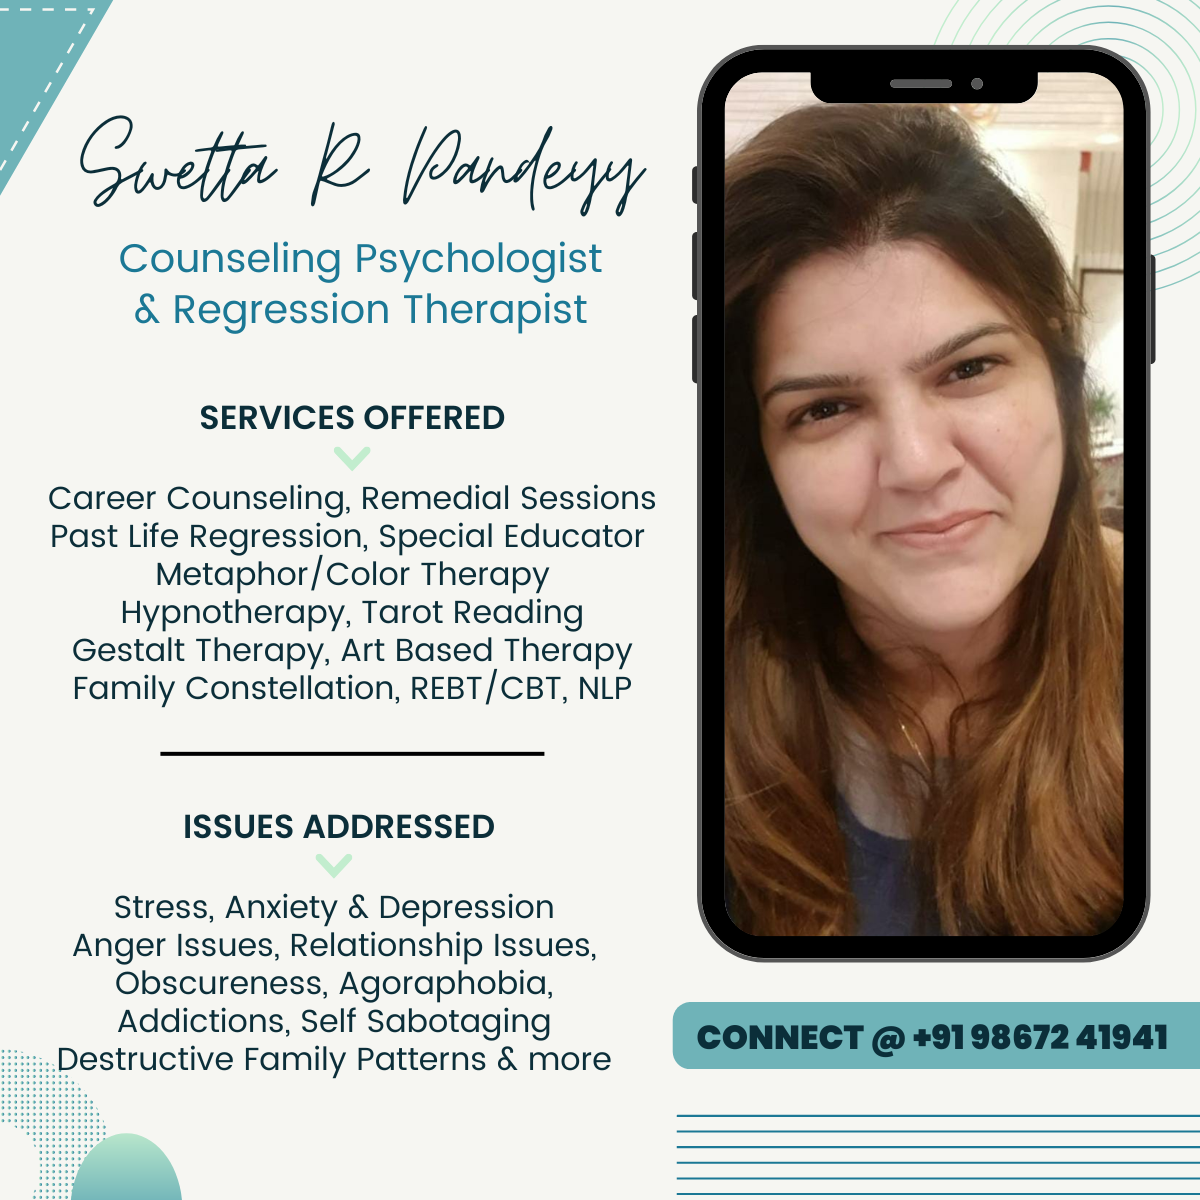 Sweta R Pandey - Counselling Psychologist & Regression Therapist- Nagpur